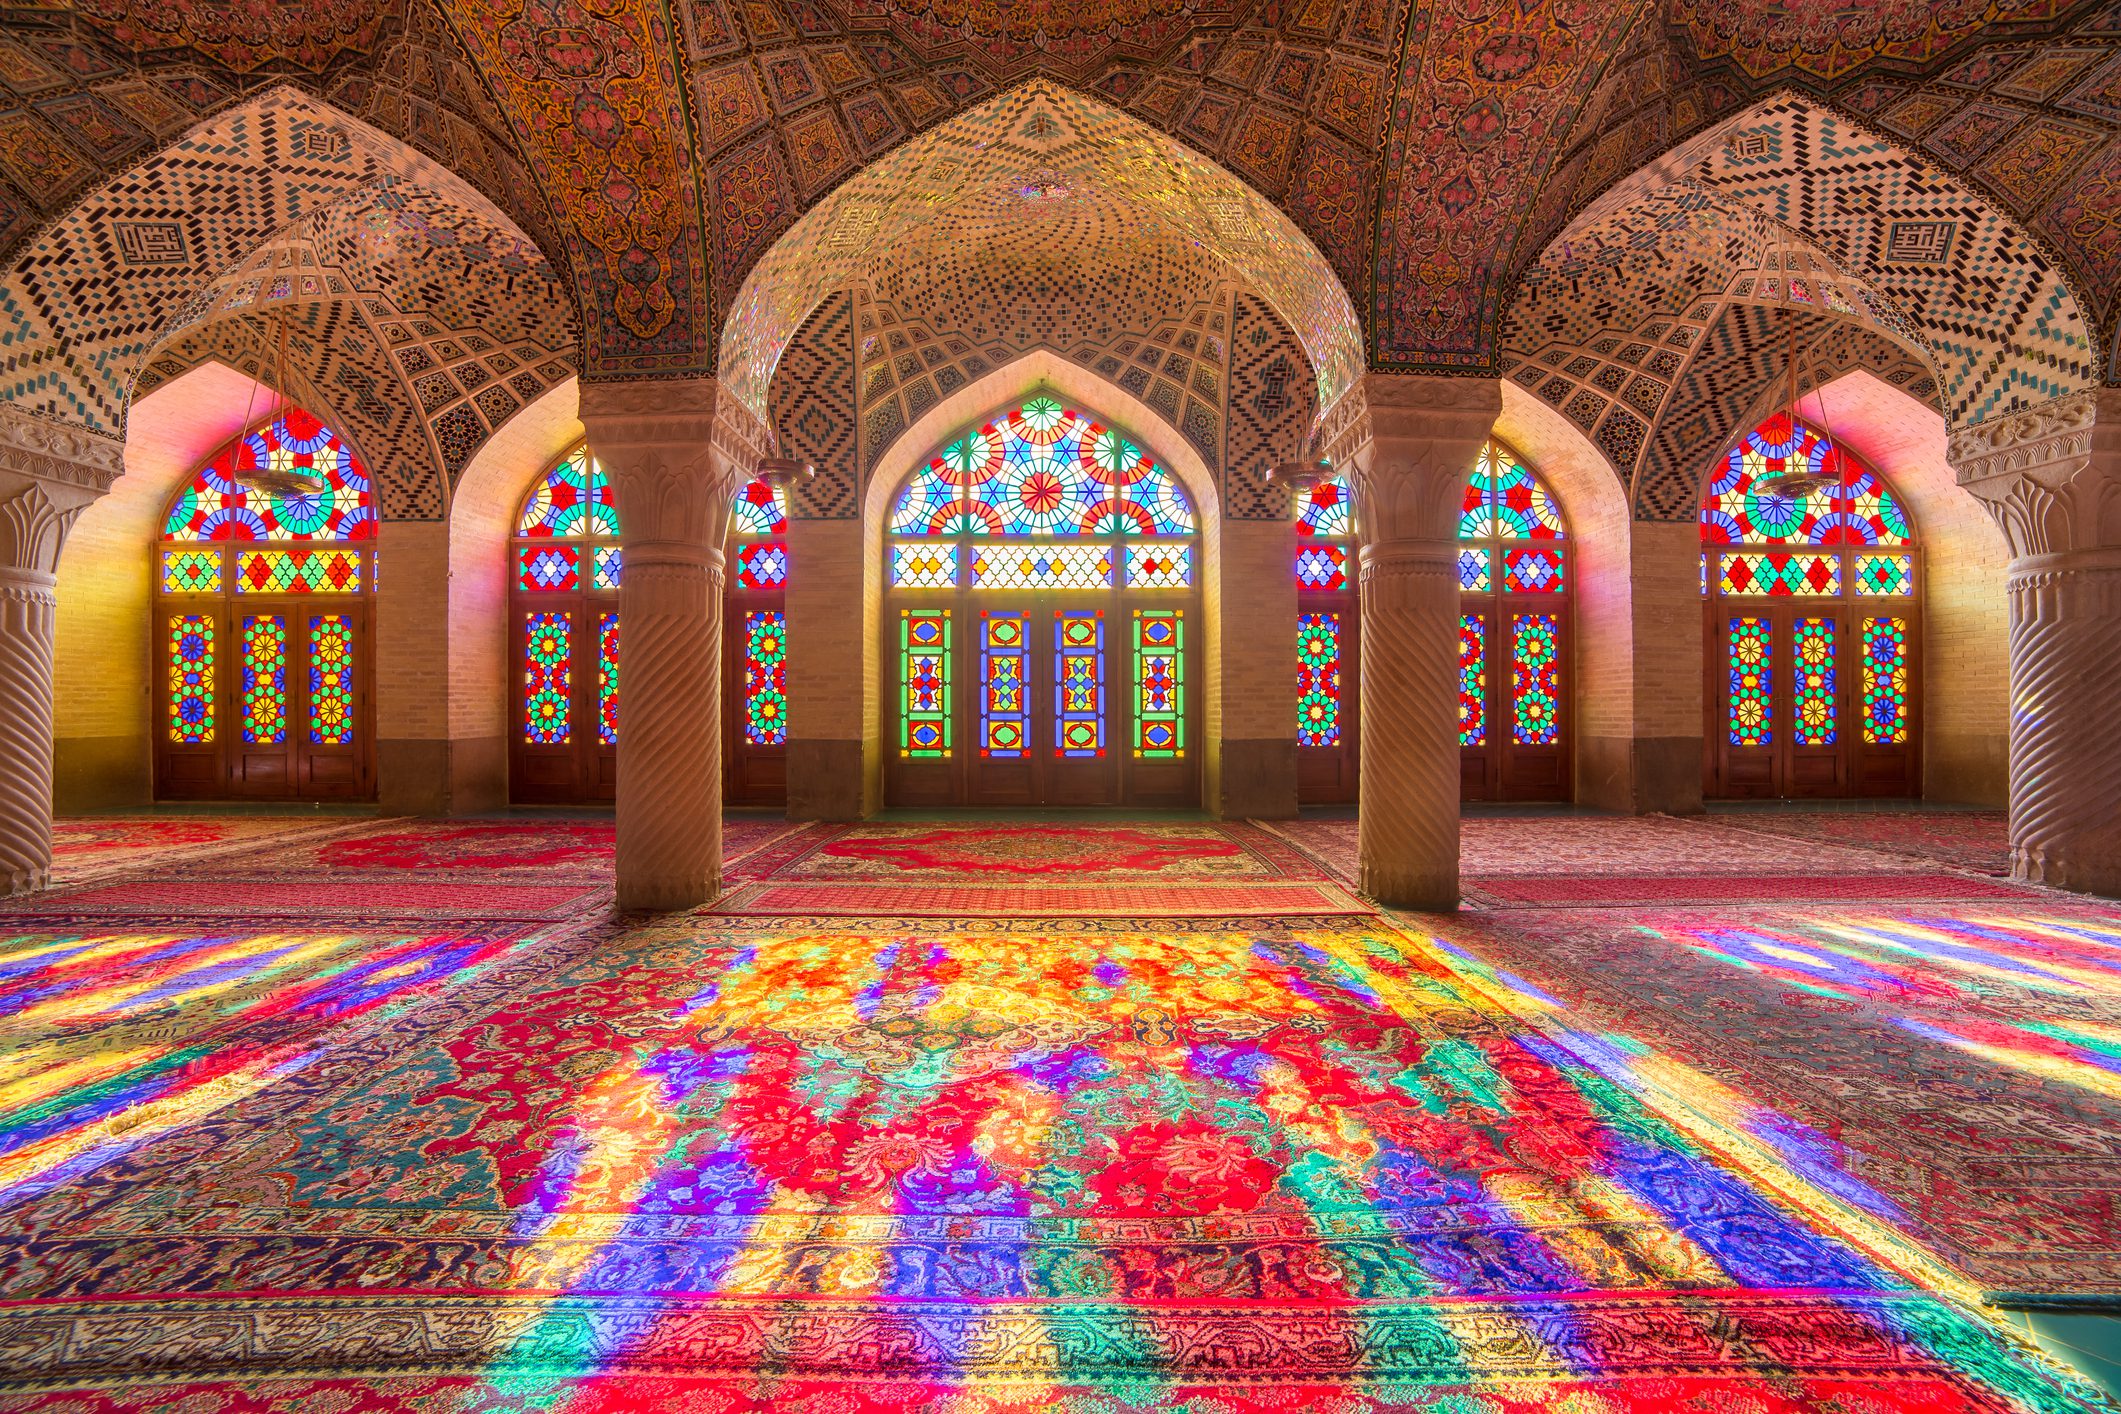 Nasir Al-Mulk Mosque (Pink Mosque) in Shiraz, Iran.